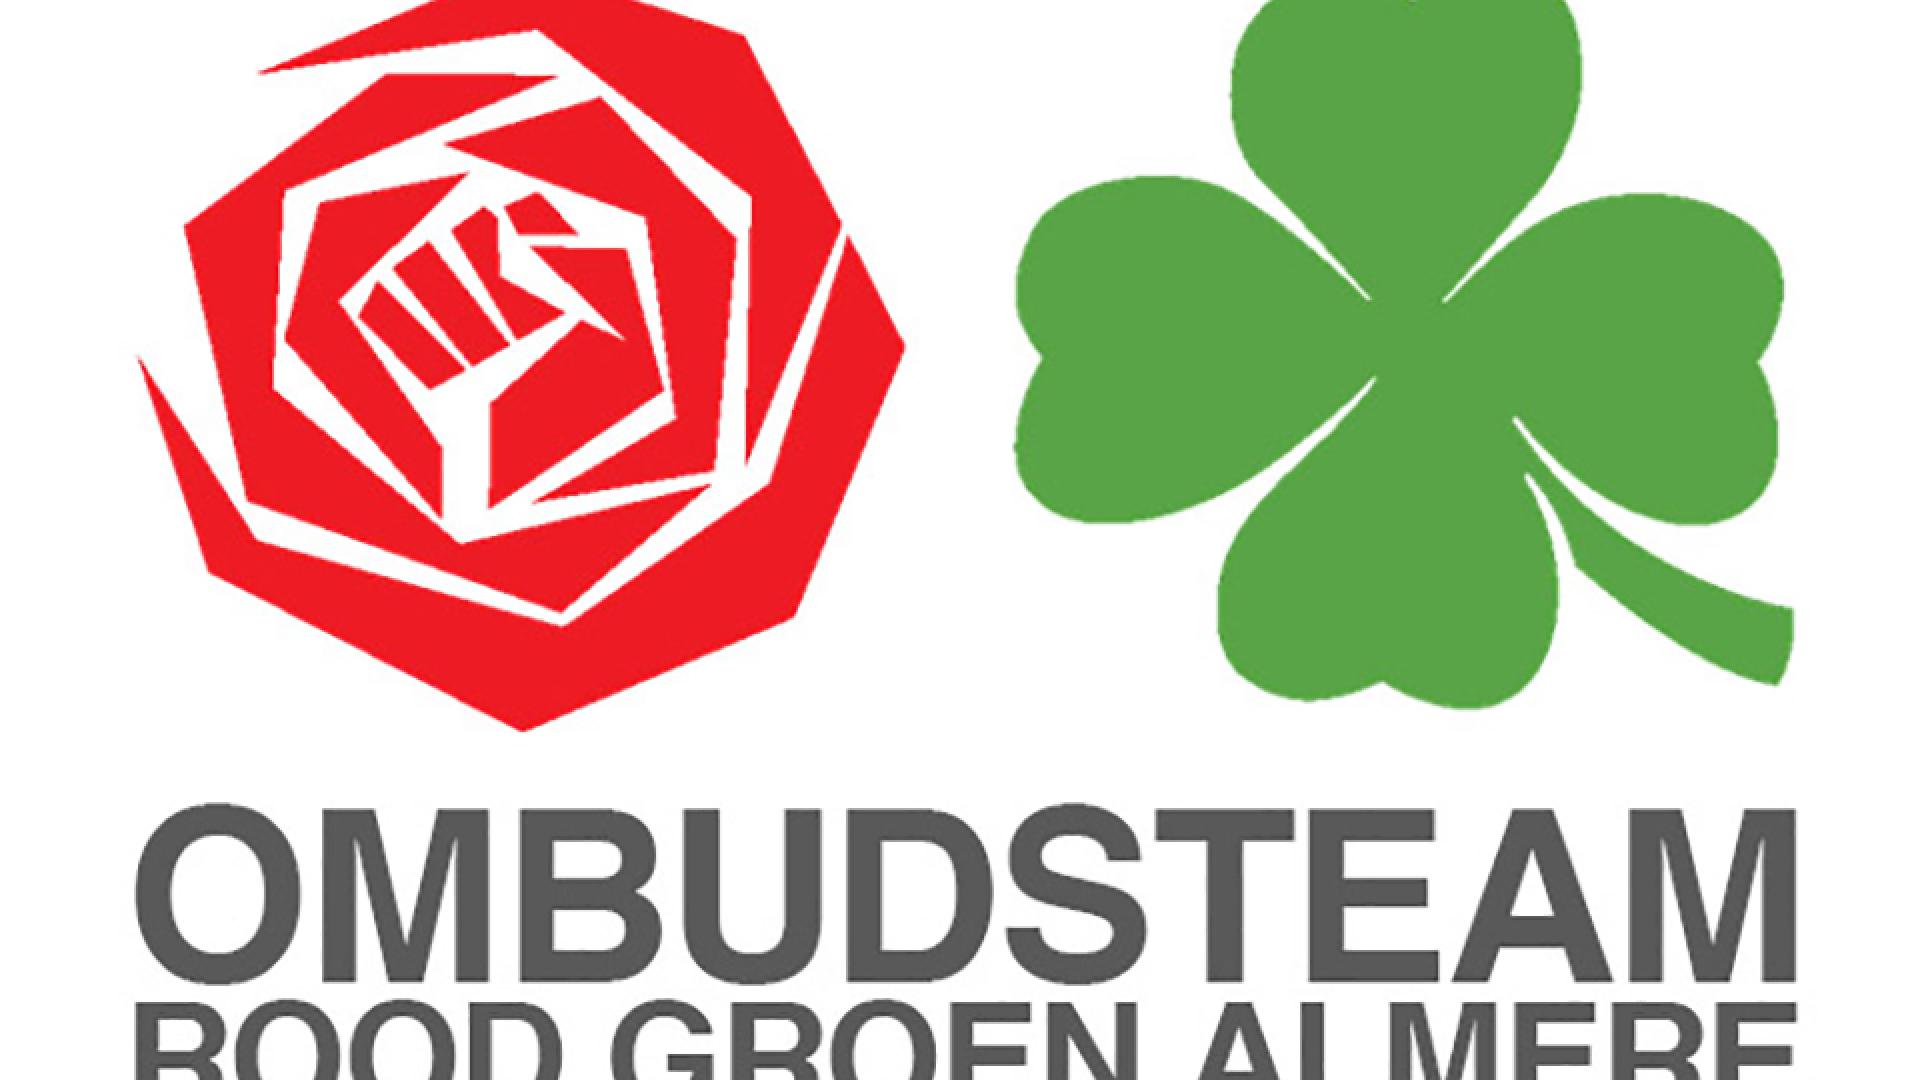 OmbudsteamRoodGroen Logo groot.jpg